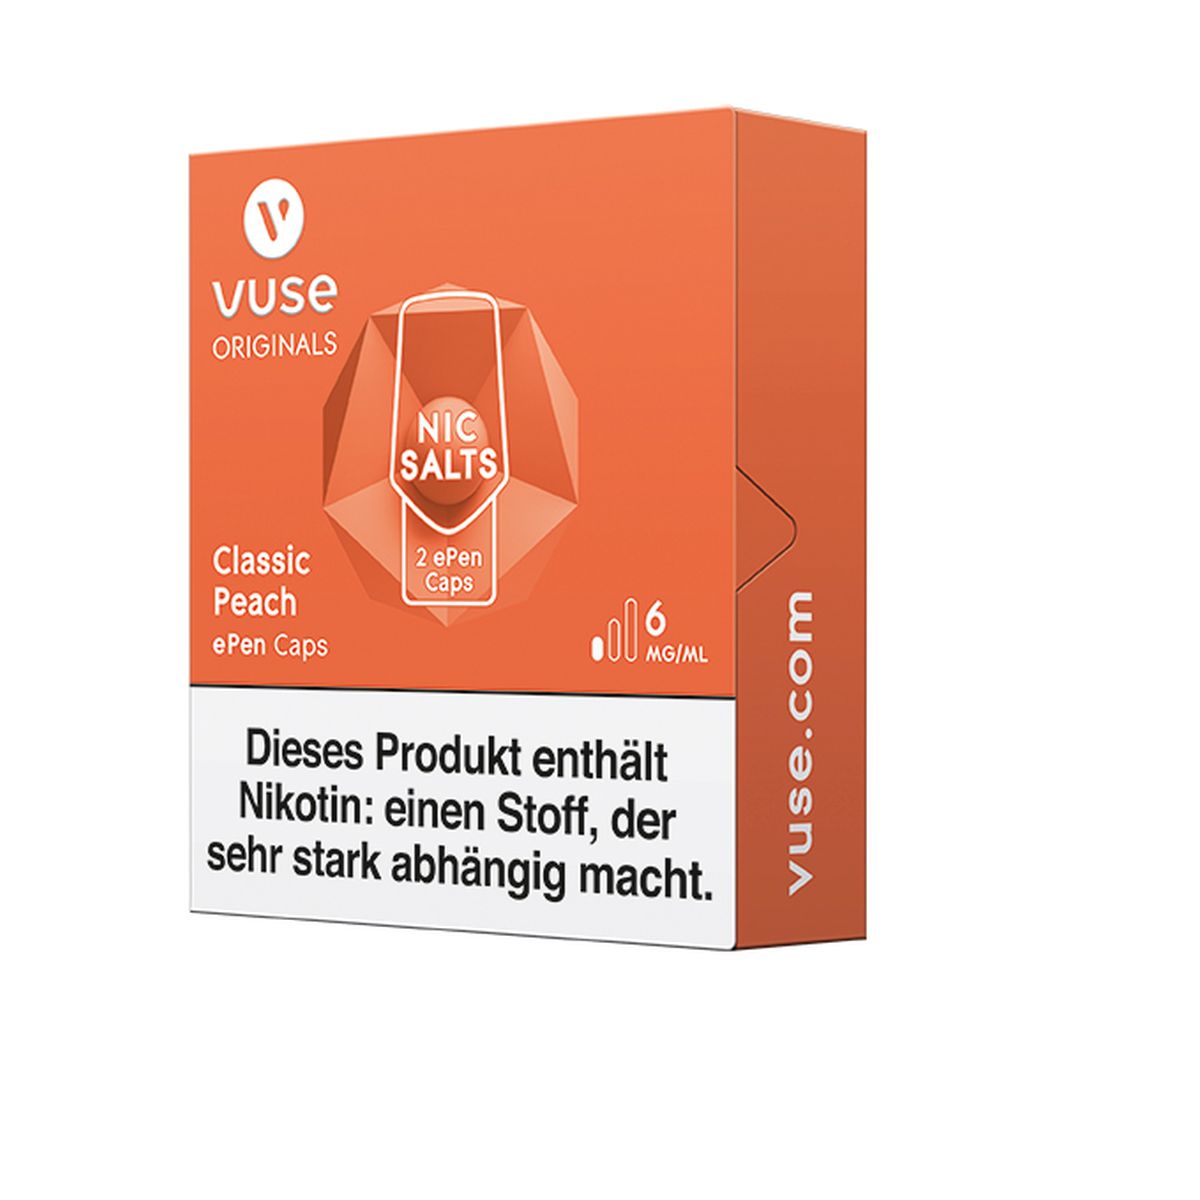 Vuse Vuse ePen Caps Classic Peach Nic Salts 6mg Nikotin 2ml bei www.Tabakring.de kaufen